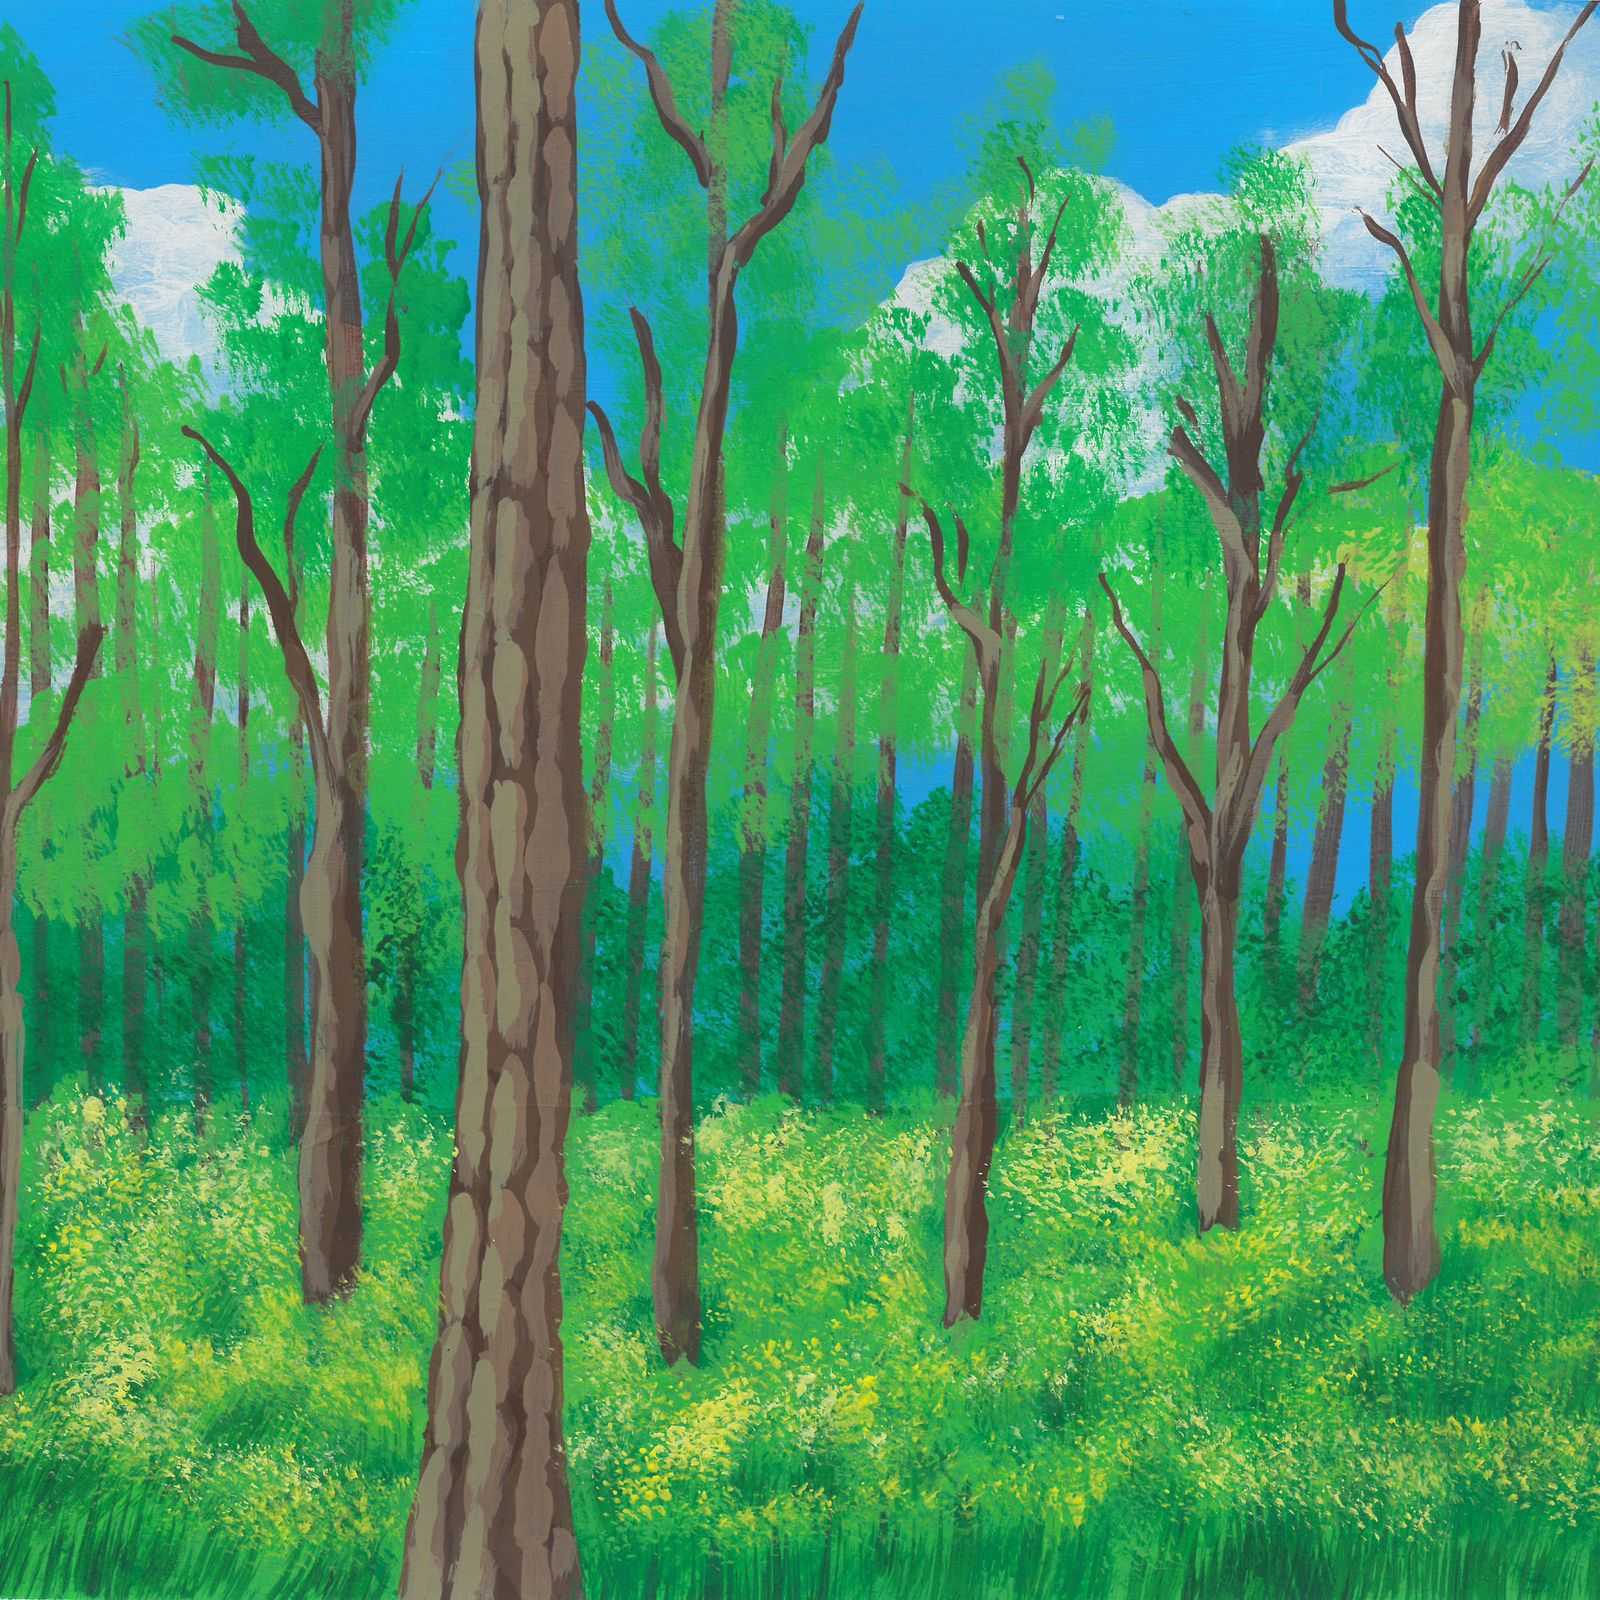 Jungle Book Forest - nature soundscape - earth.fm